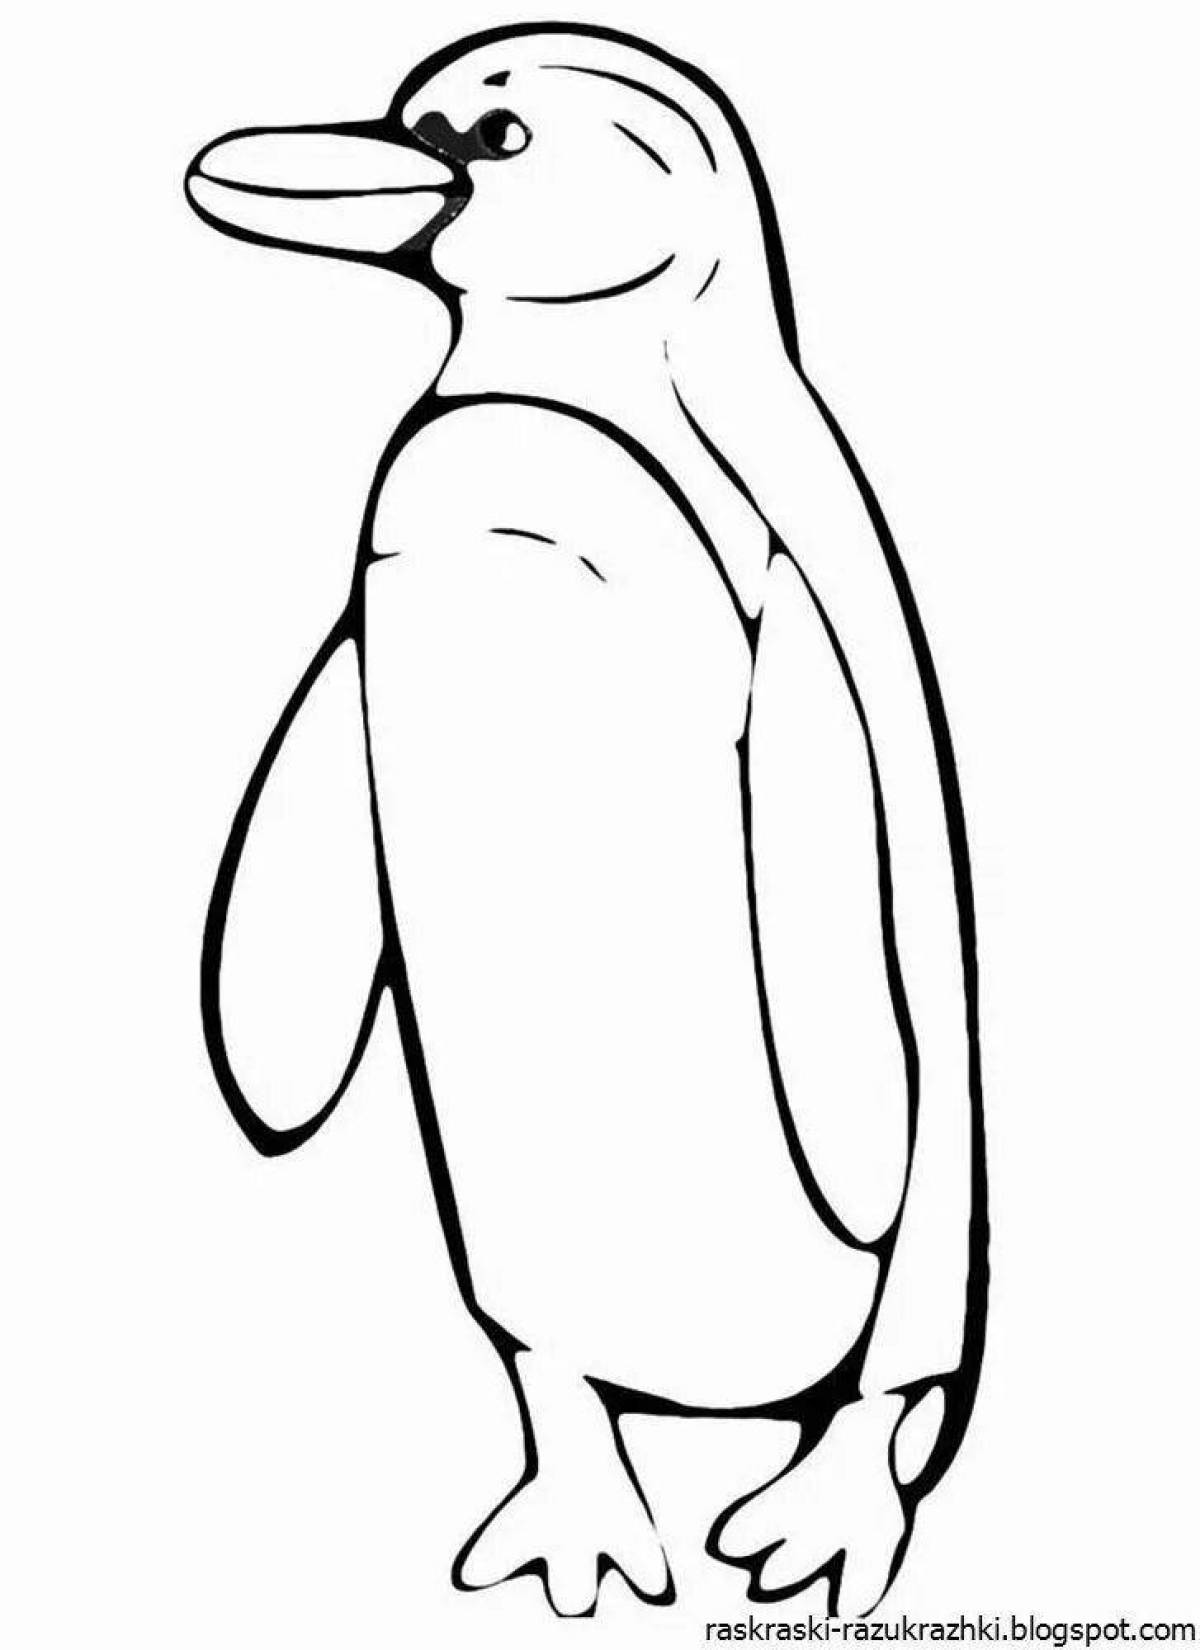 Penguin drawing for kids #2